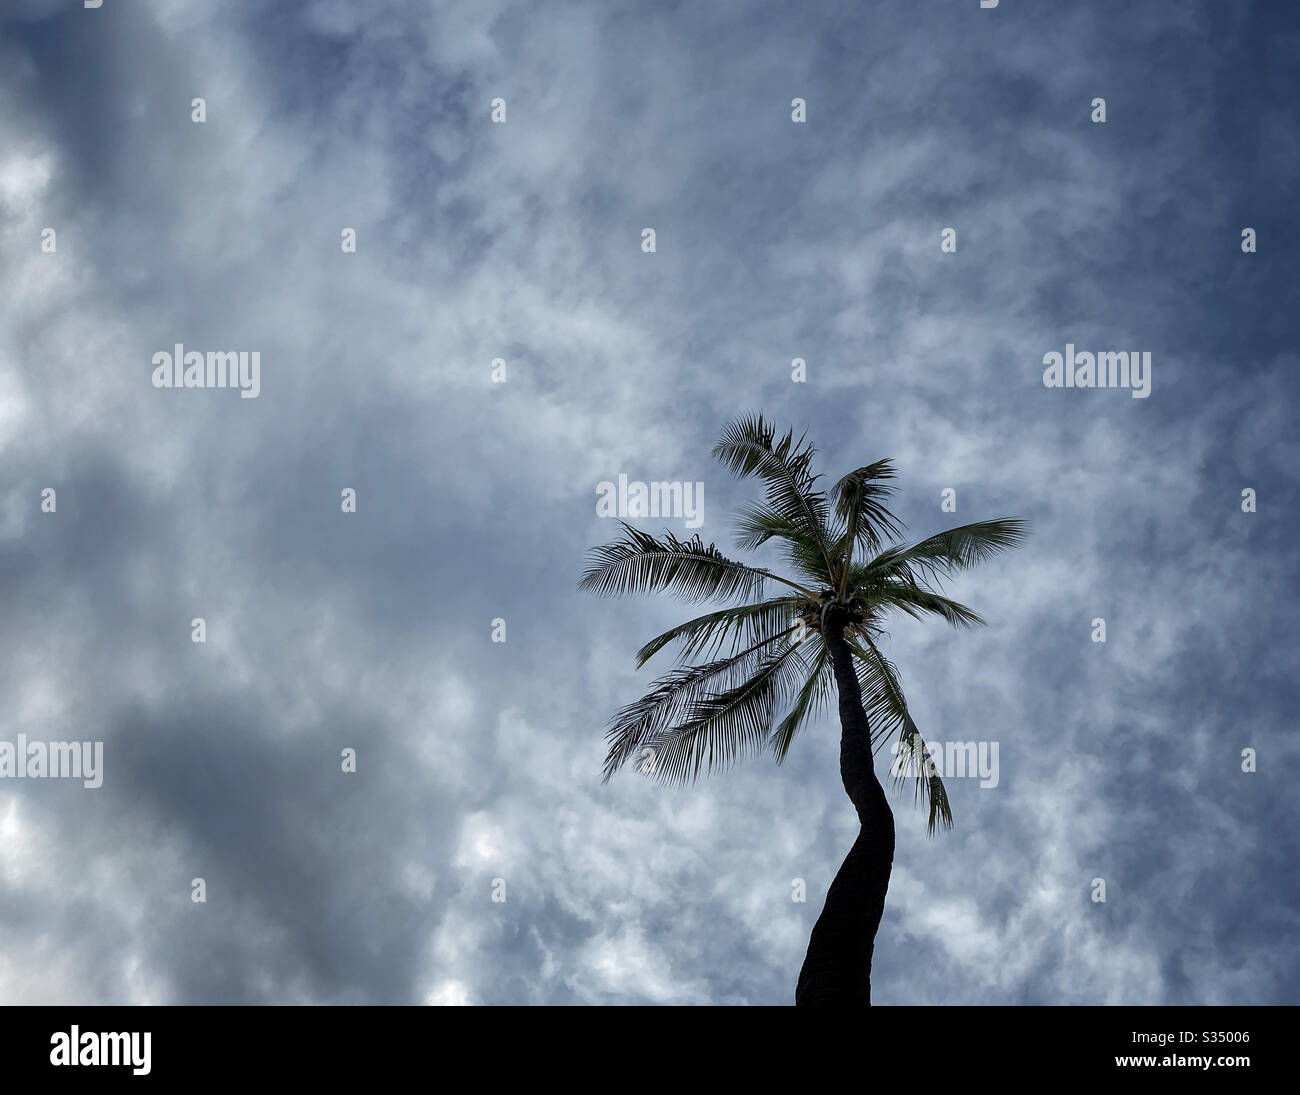 Kokospalmenumriss gegen einen bewölkten Himmel Stockfoto